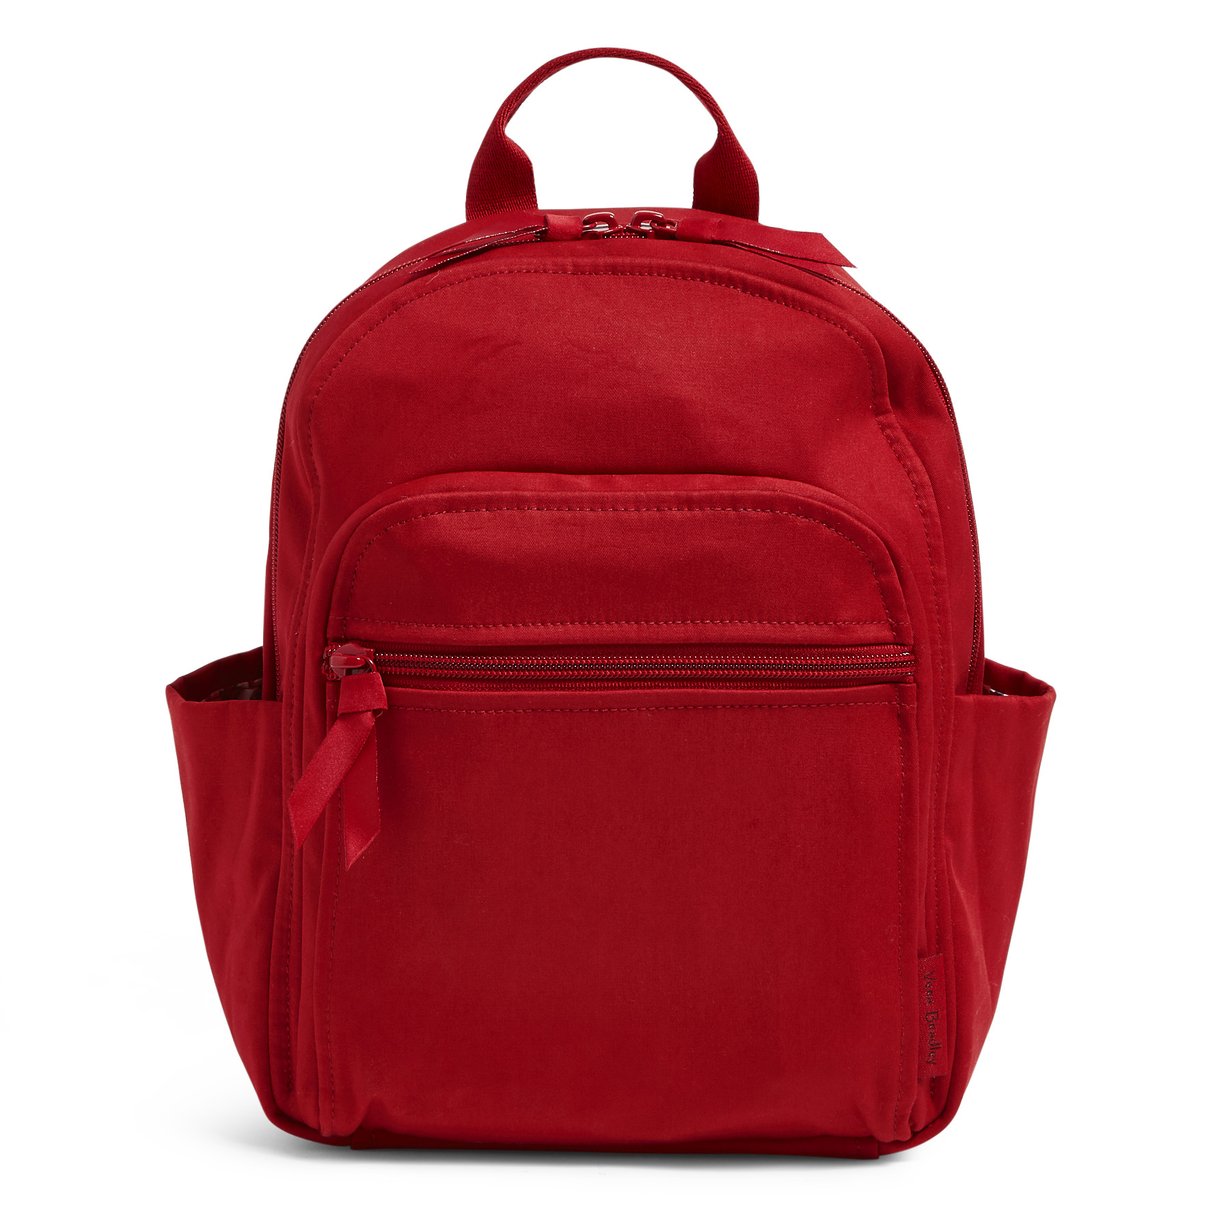 Vera Bradley Small Backpack Cardinal Red